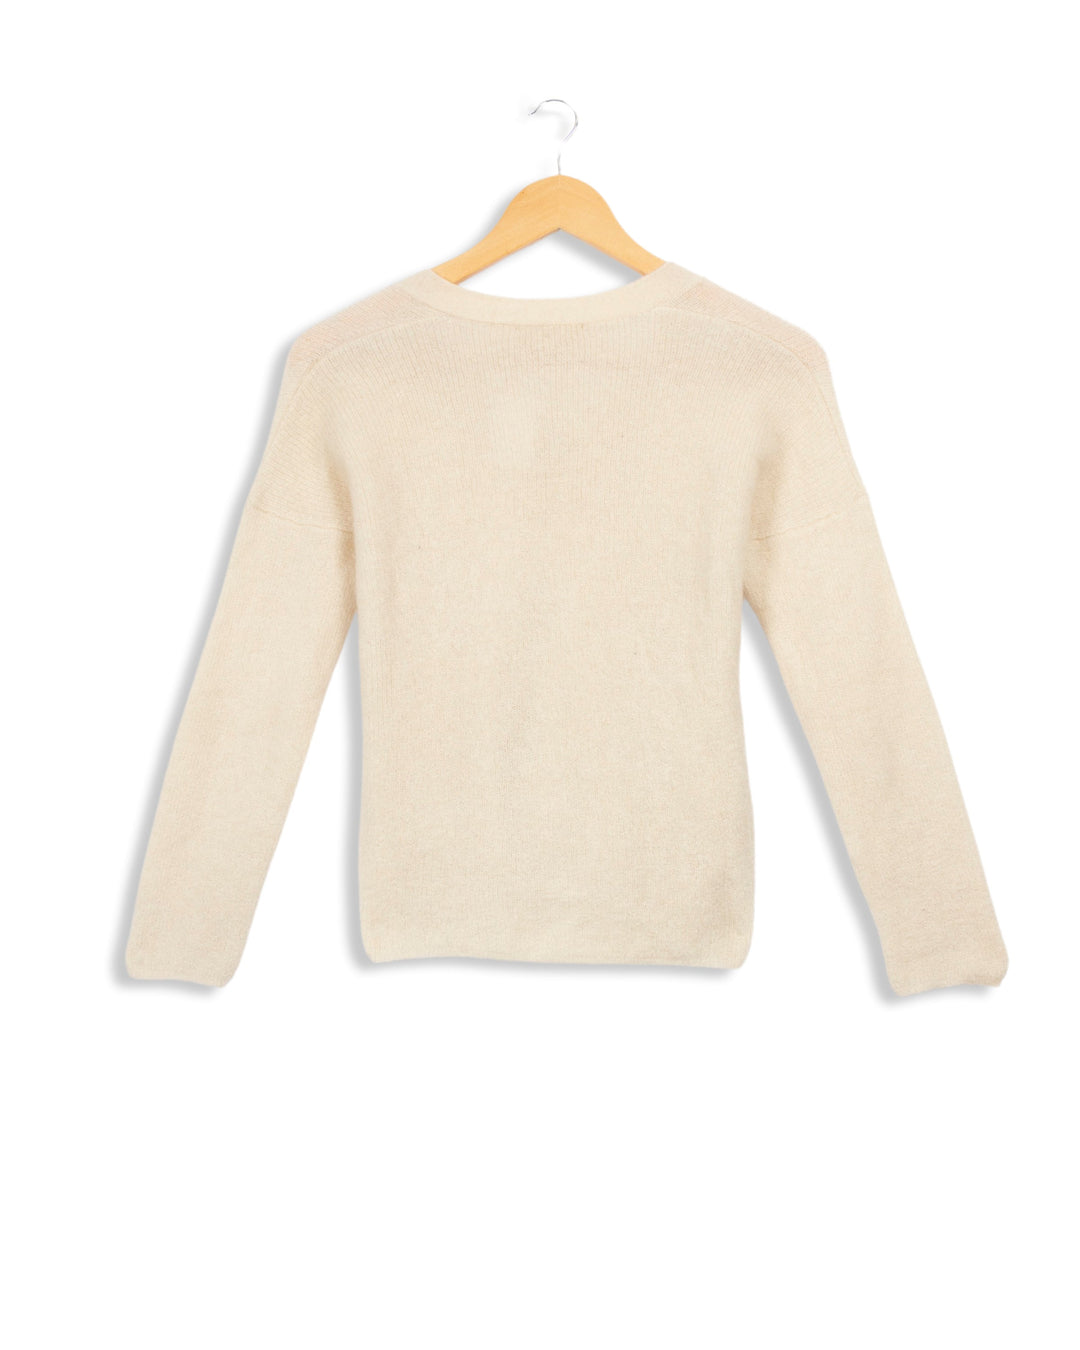 Cream sweater - S